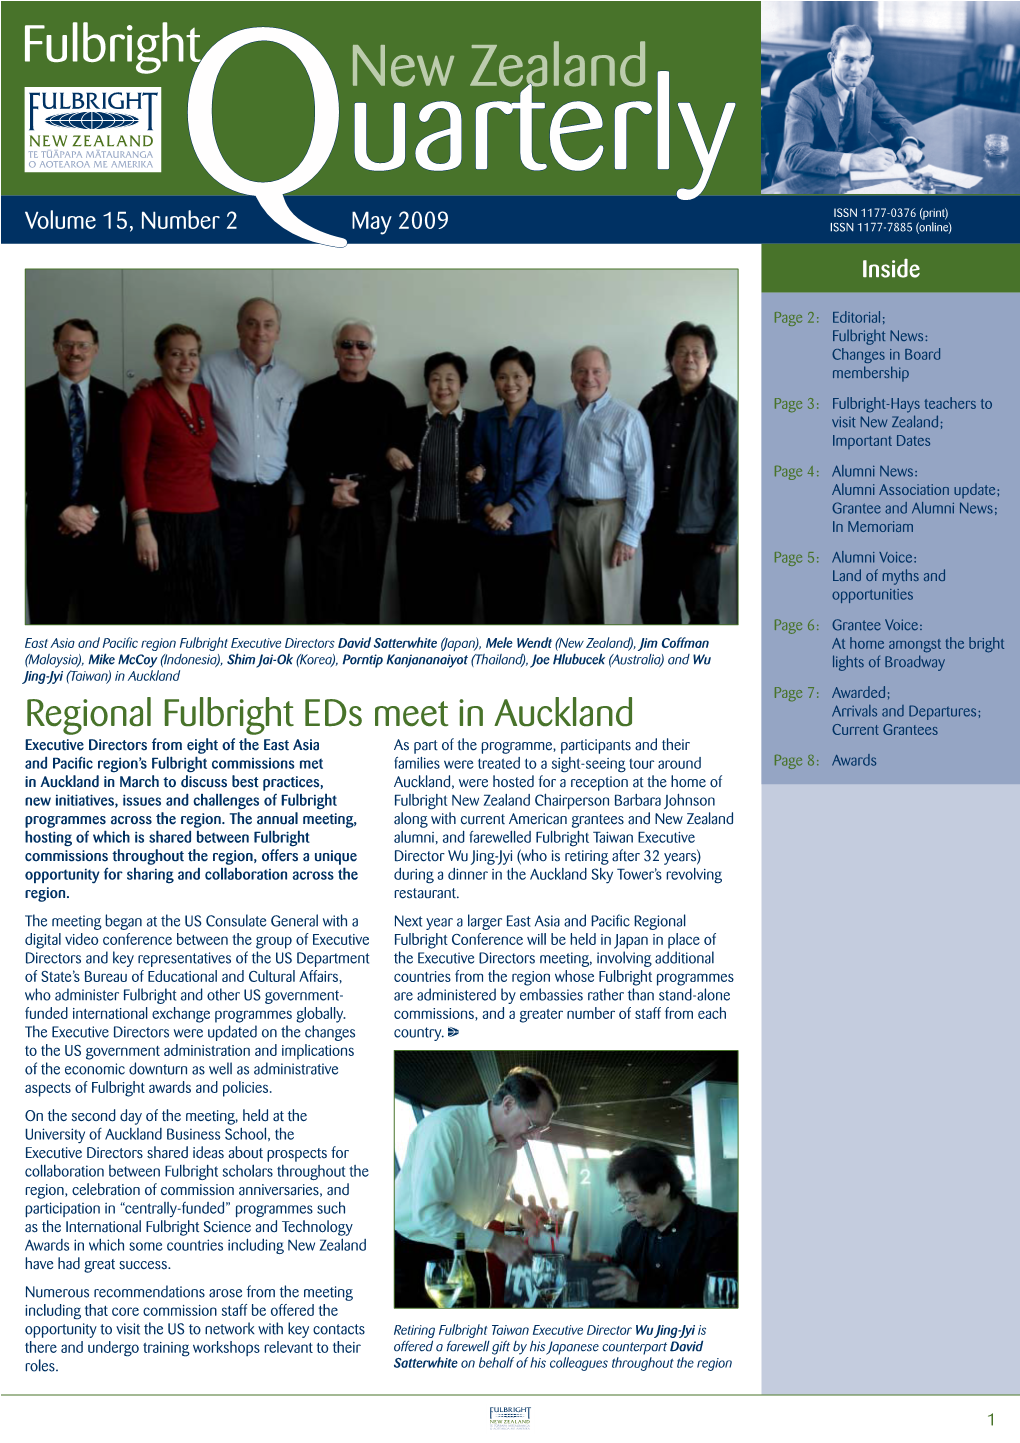 Fulbright New Zealand Quarterly, May 2009